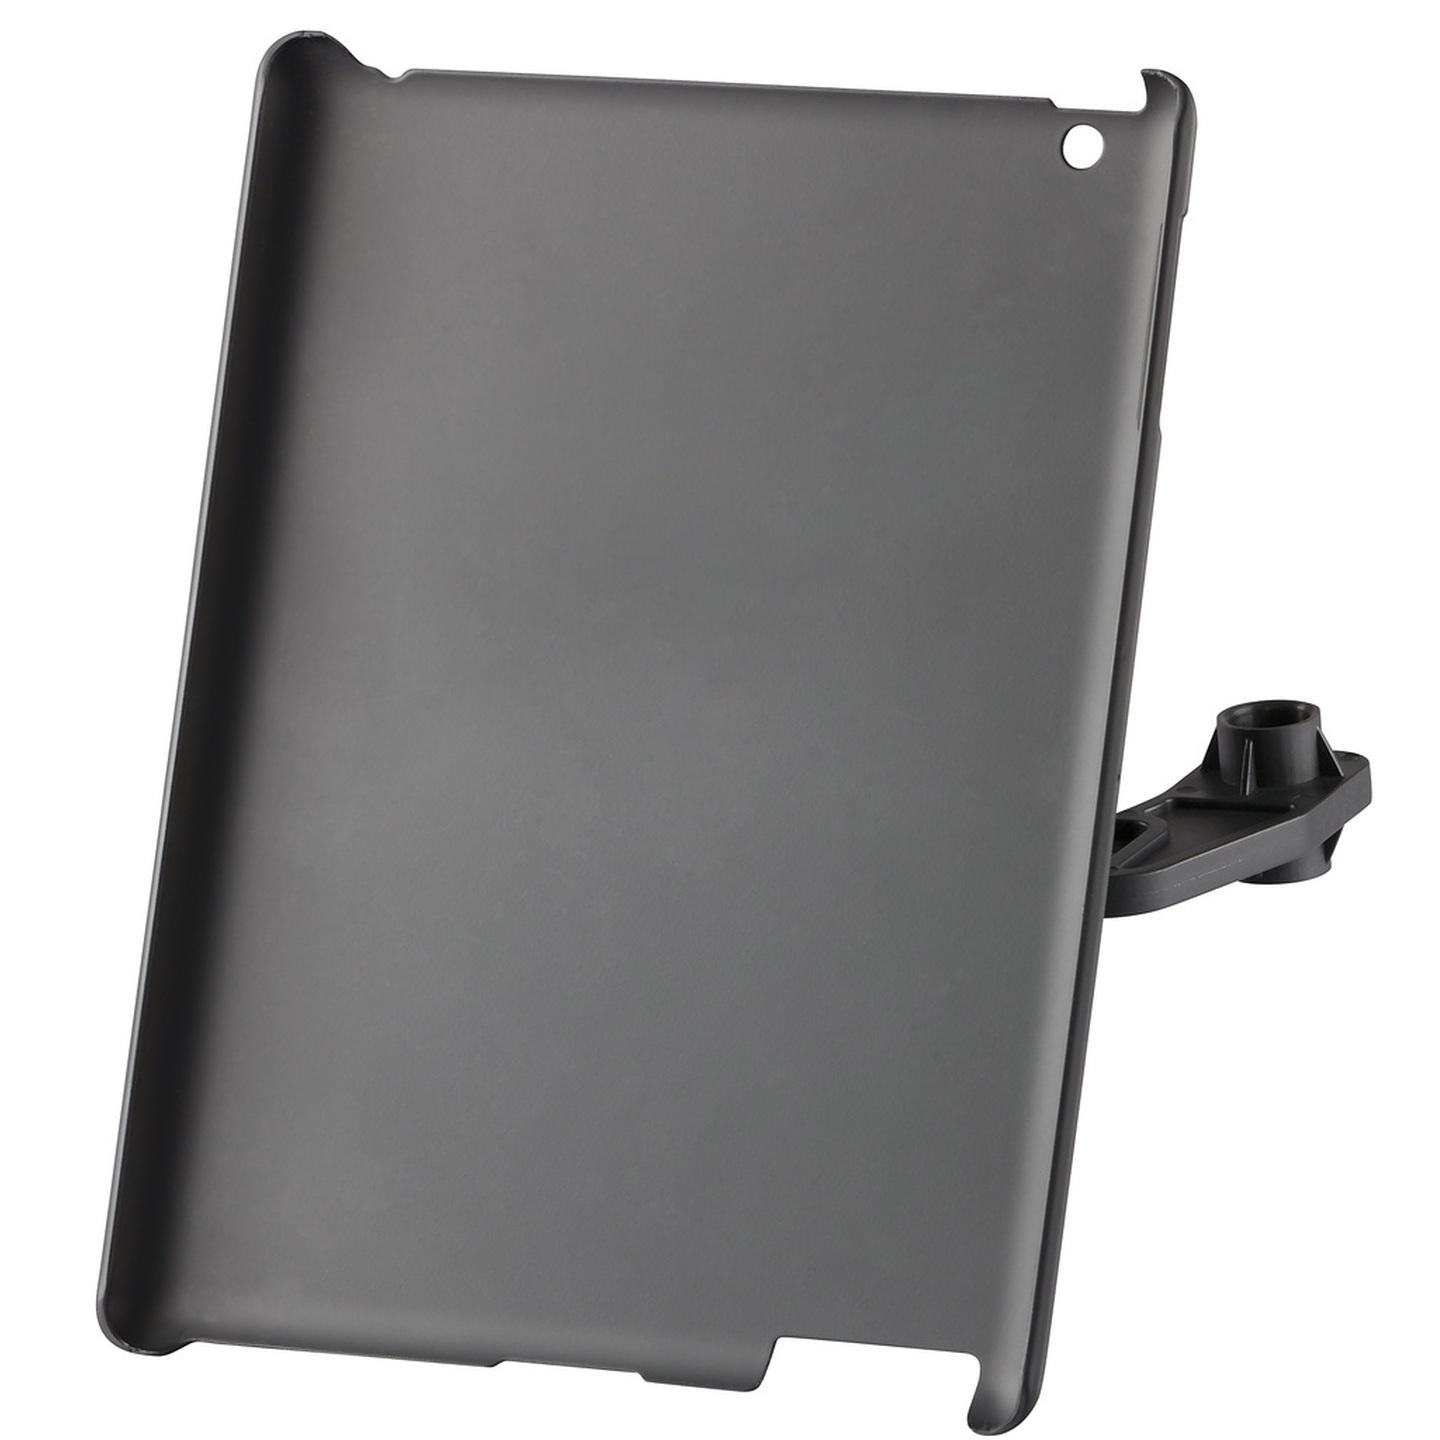 iPad Headrest Mounting Bracket